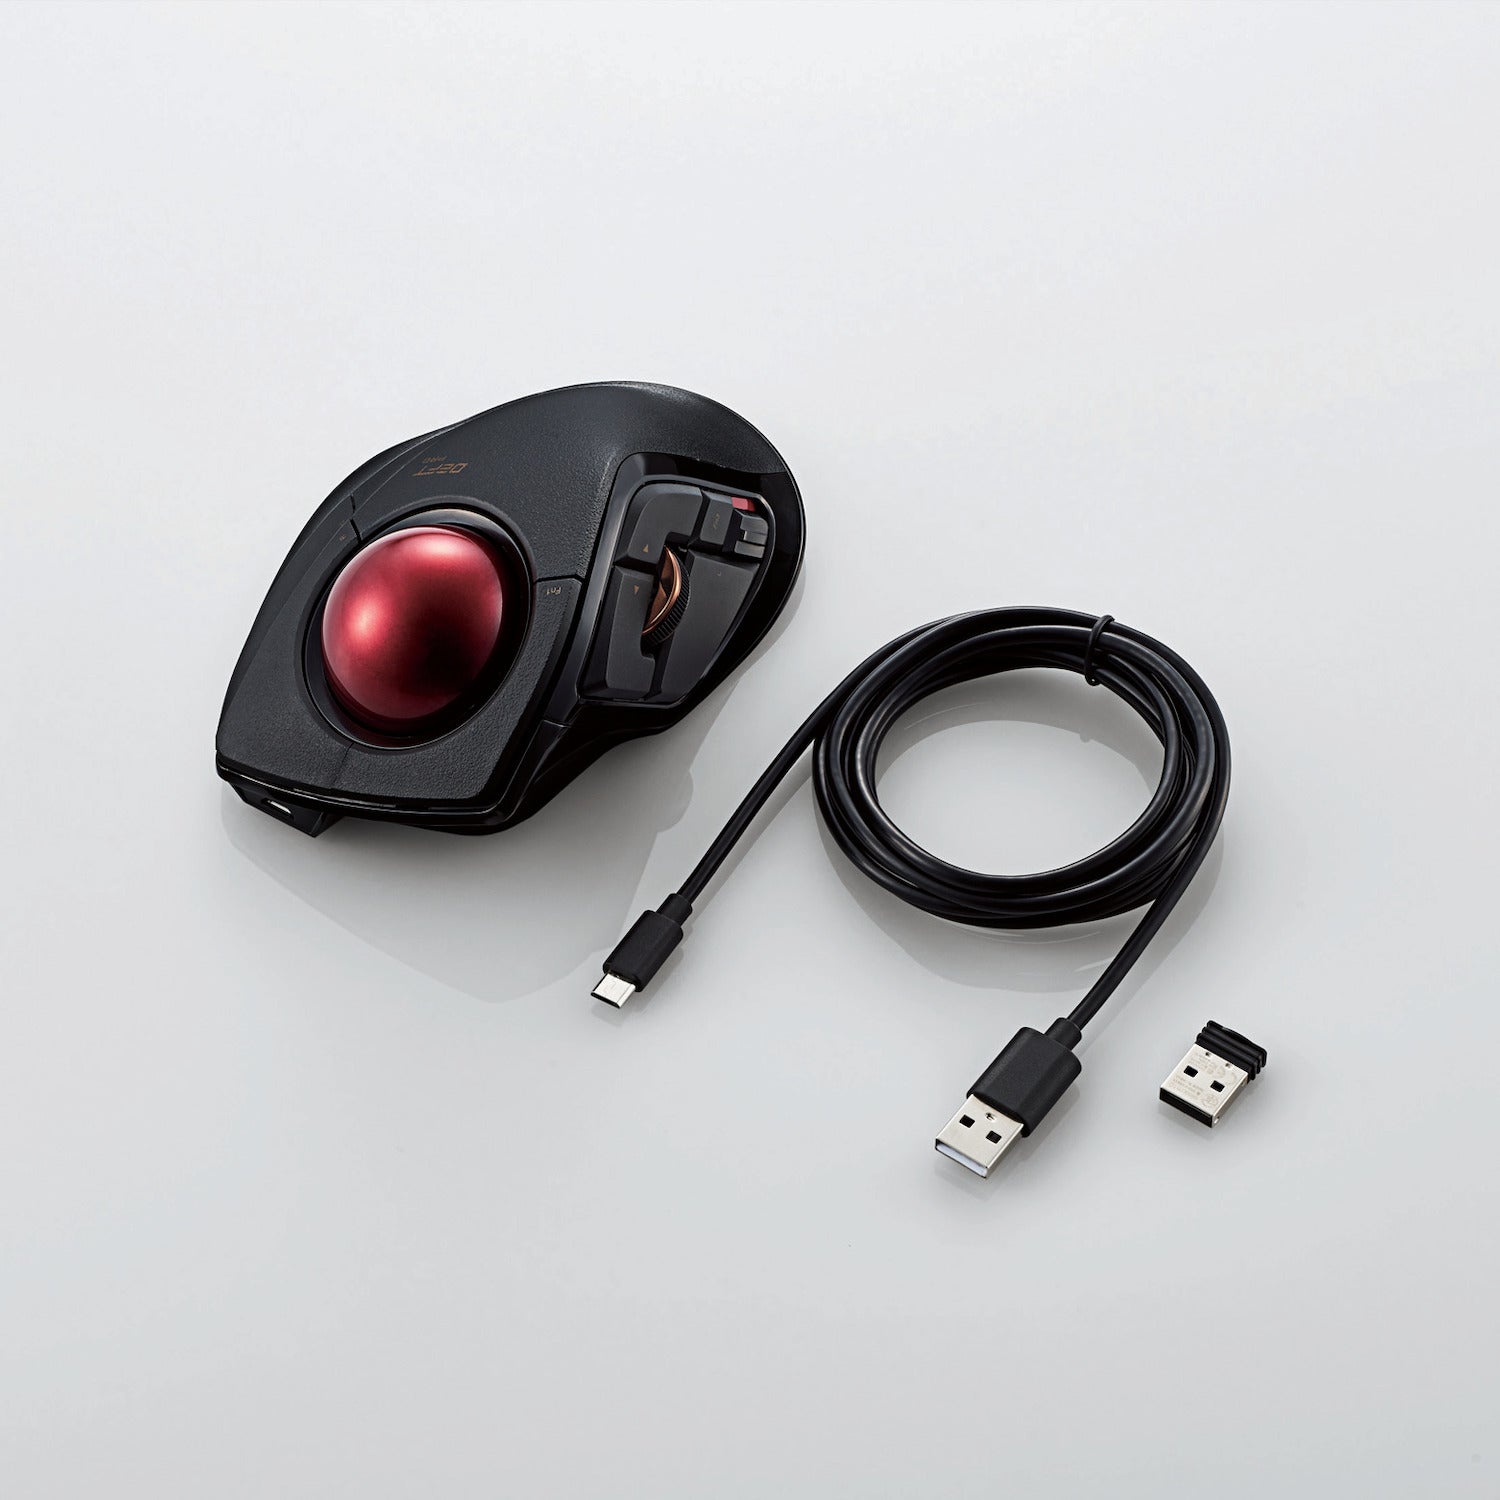 DEFT PRO Trackball Mouse